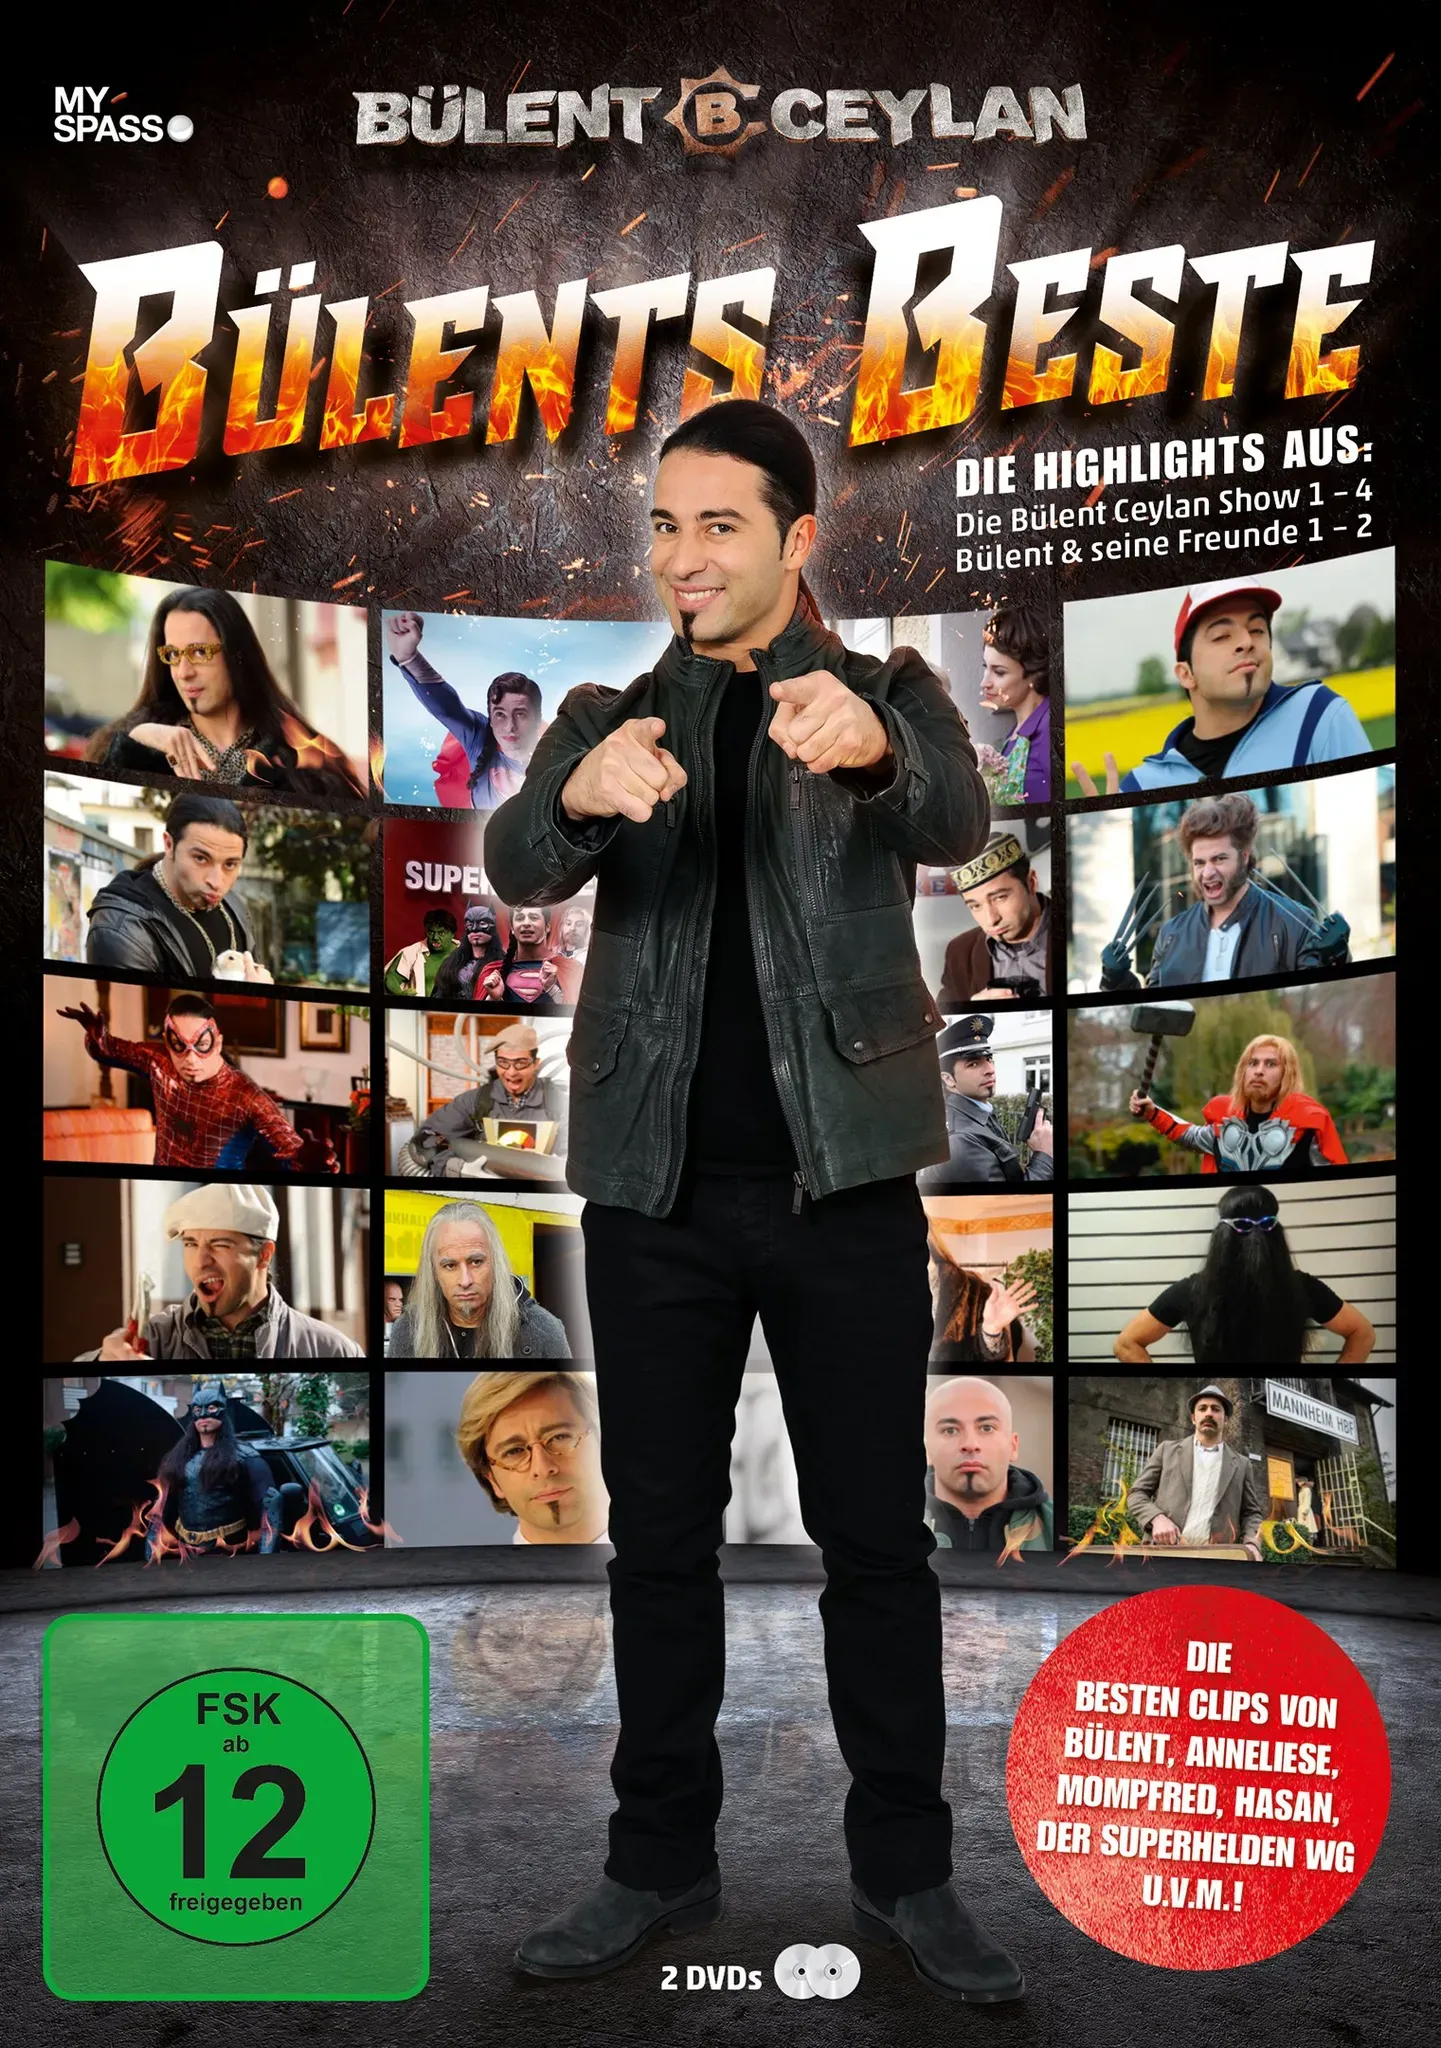 Bülent Ceylan - Bülents Beste [2 DVDs] (Neu differenzbesteuert)